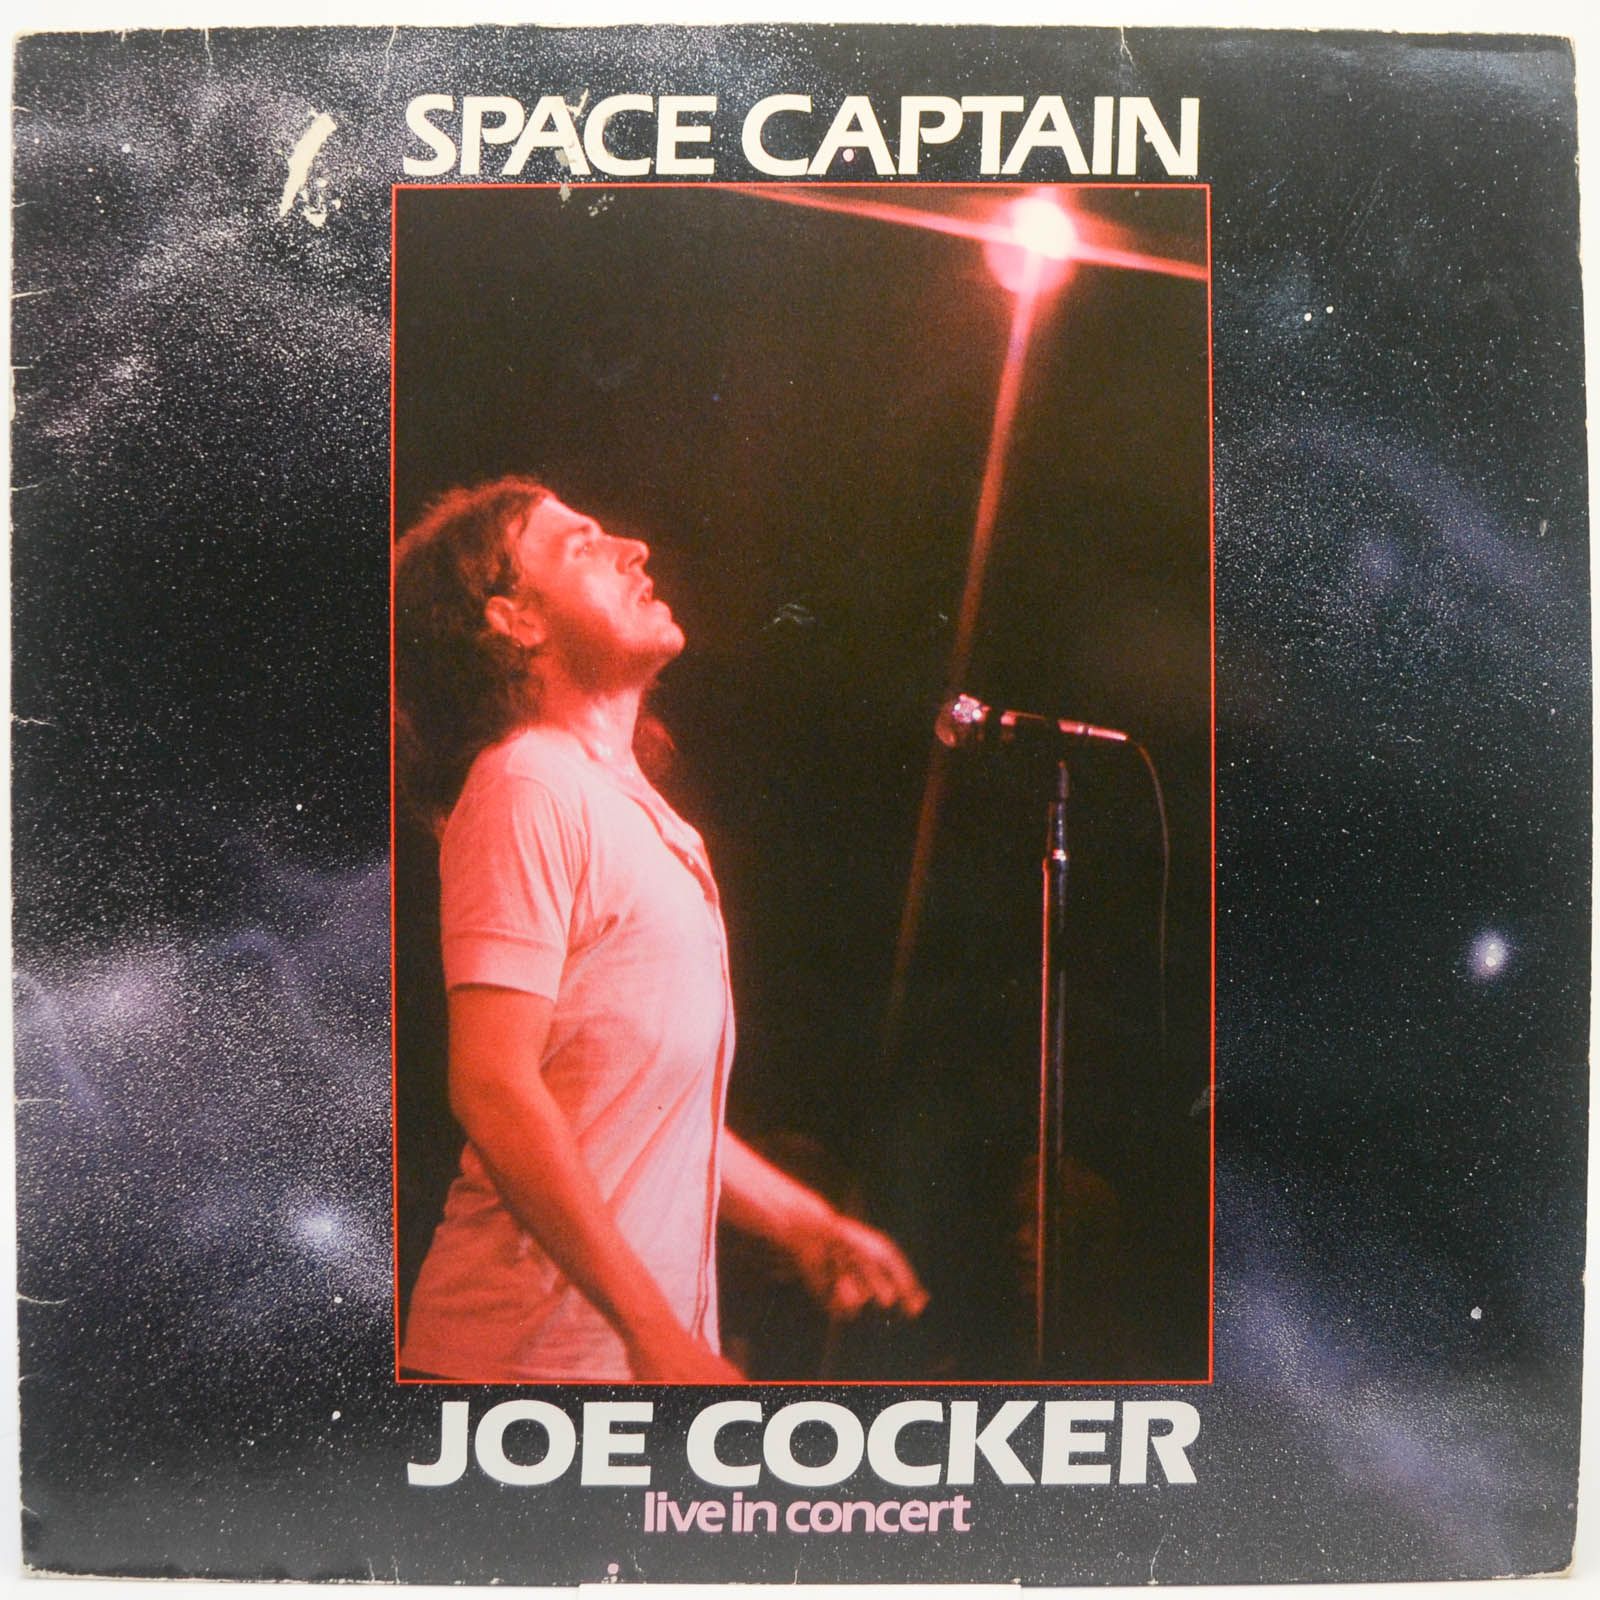 Joe Cocker — Space Captain, 1982